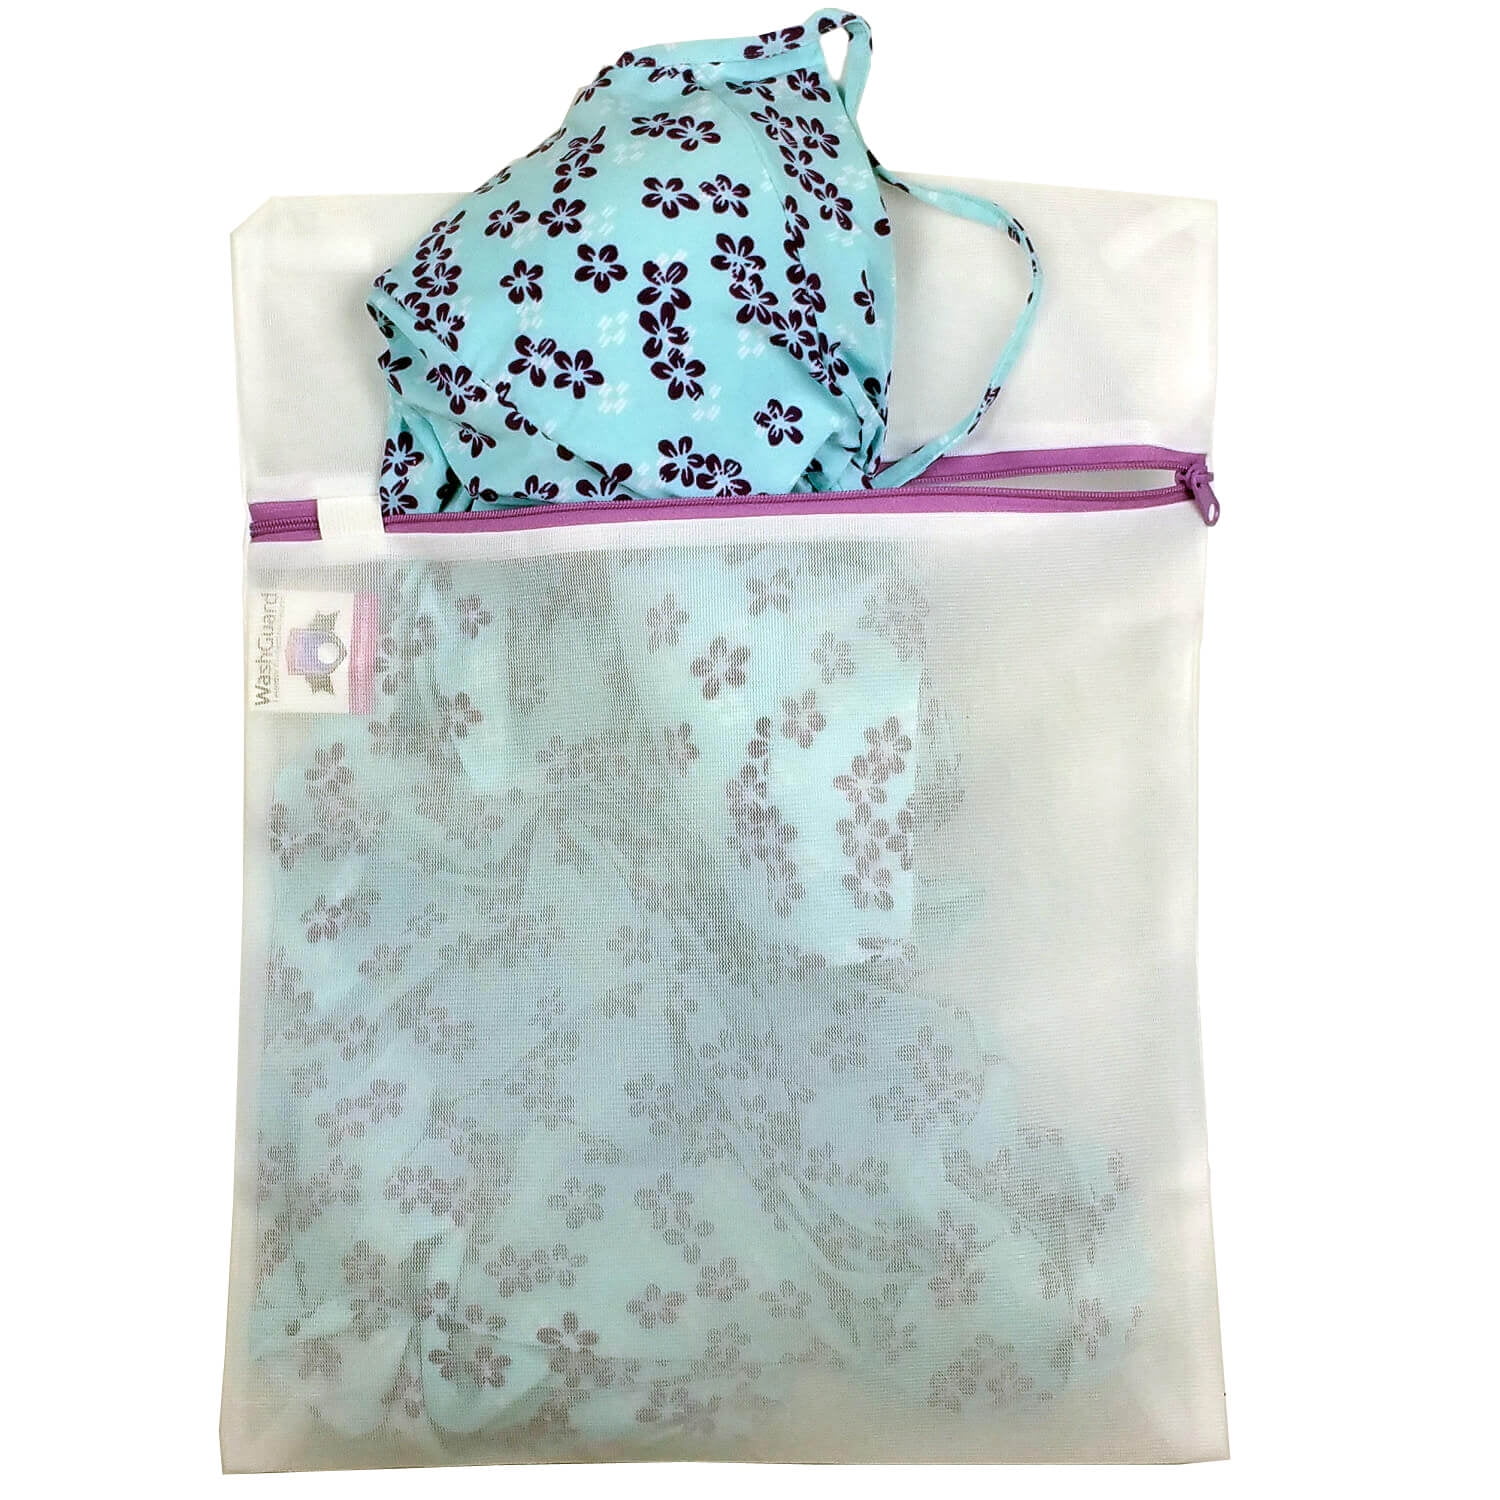 BAGAIL 2Pcs Mesh Laundry Bag for Delicates, Mesh Wash Bag with Premium  Zipper, Blouse, Hosiery, Unde…See more BAGAIL 2Pcs Mesh Laundry Bag for